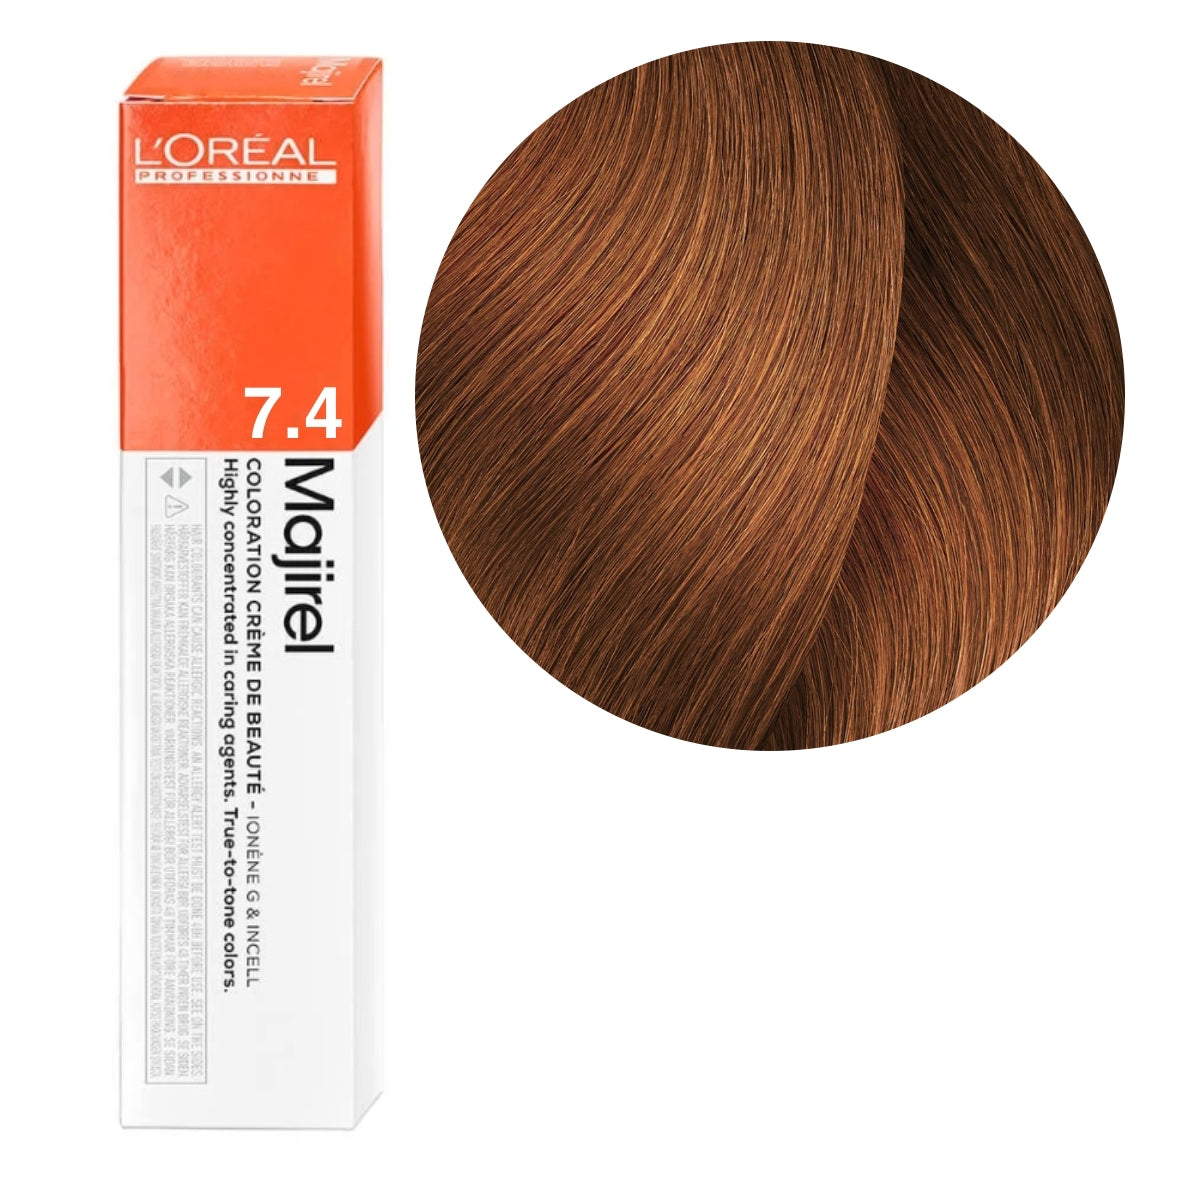 a box of lorel hair color 7.4 medium brown